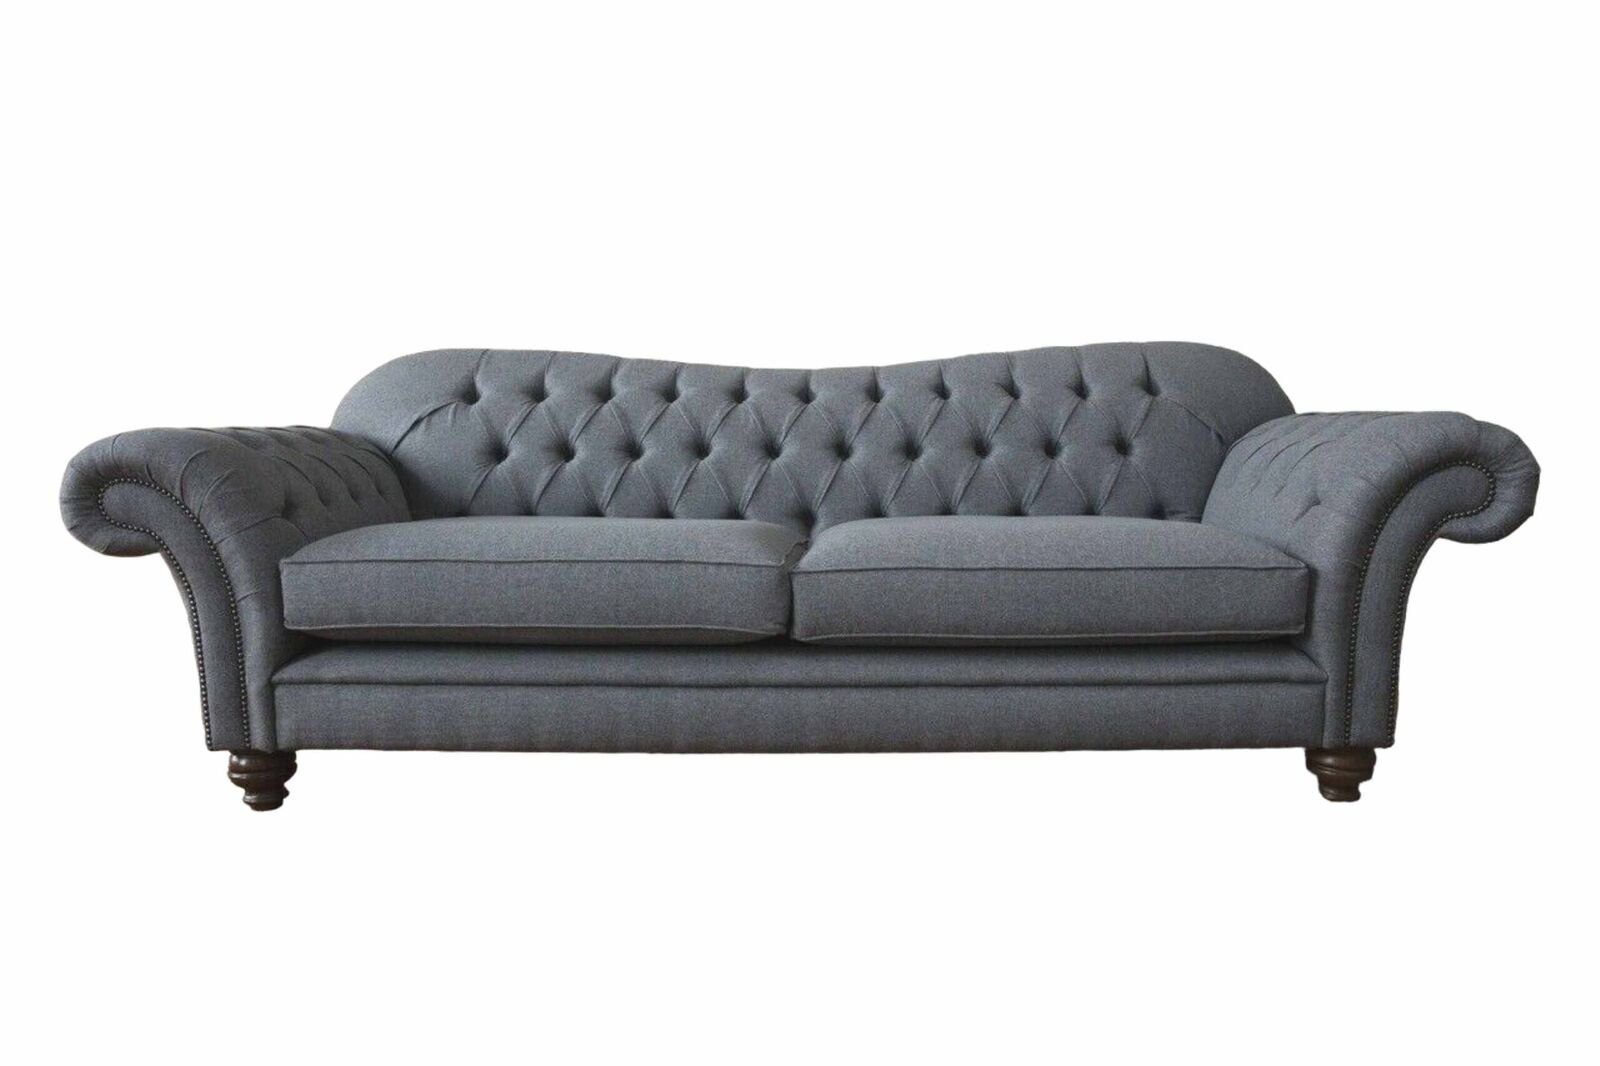 JVmoebel Sofa Modernes Sofa 3 Sitzer Luxus Textil Couch Grau Sofas Polster Stoff Neu, Made in Europe